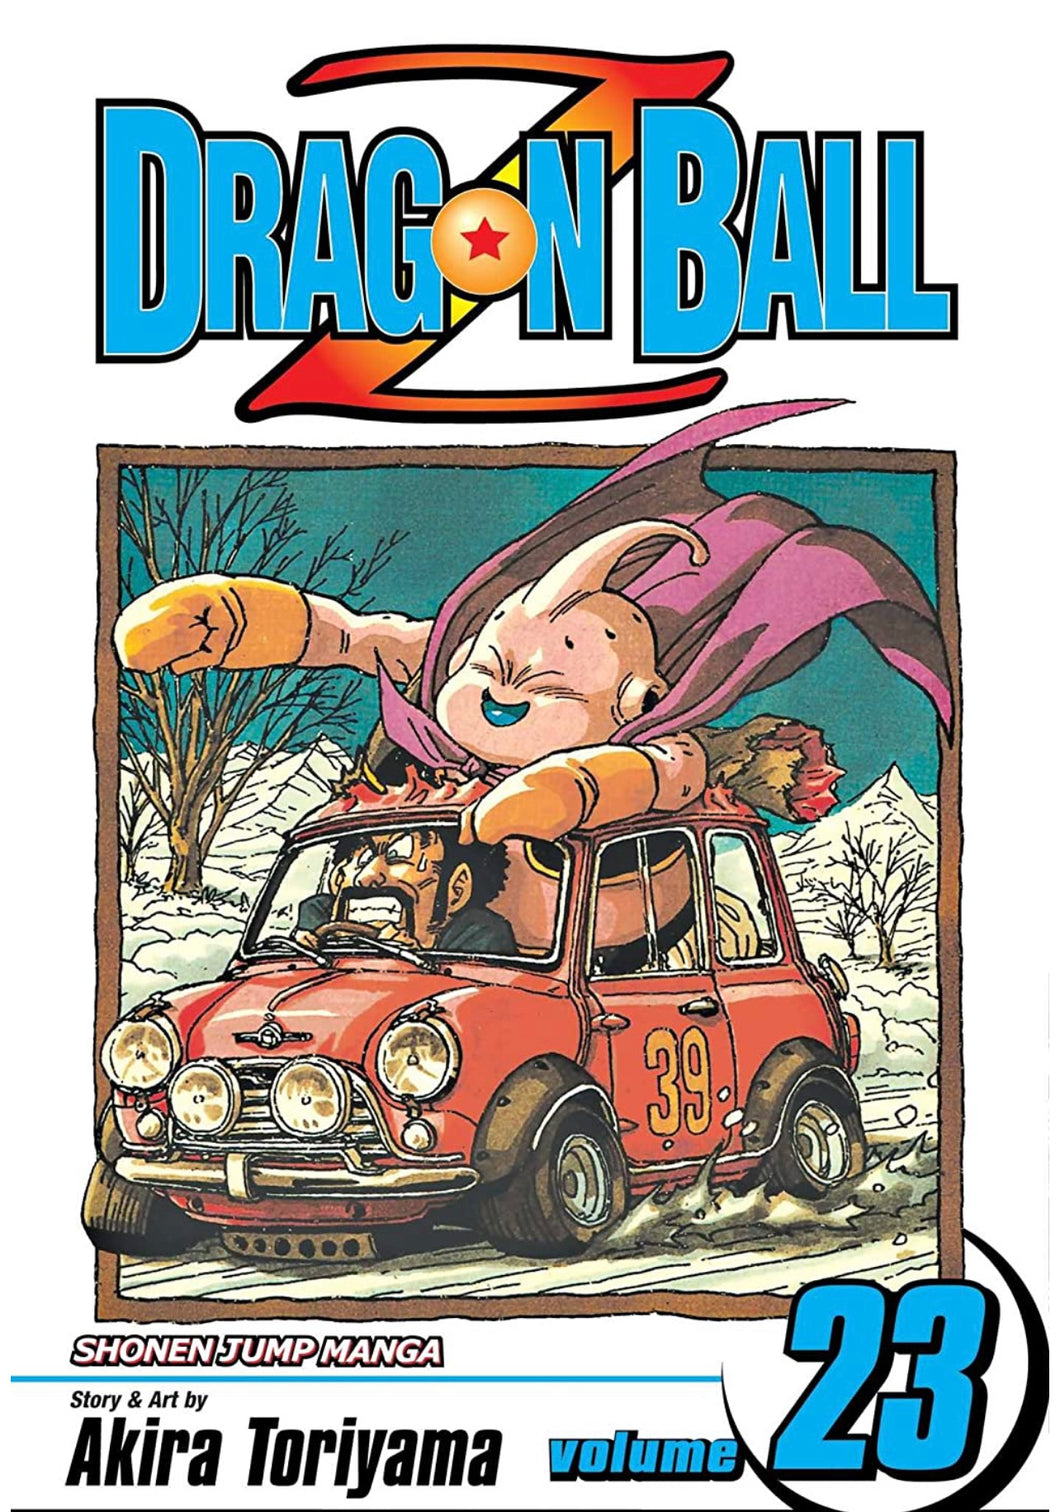 Dragonball Z Signed Manga by Josh Martin (Buu) & Chris Rager (Hercule)